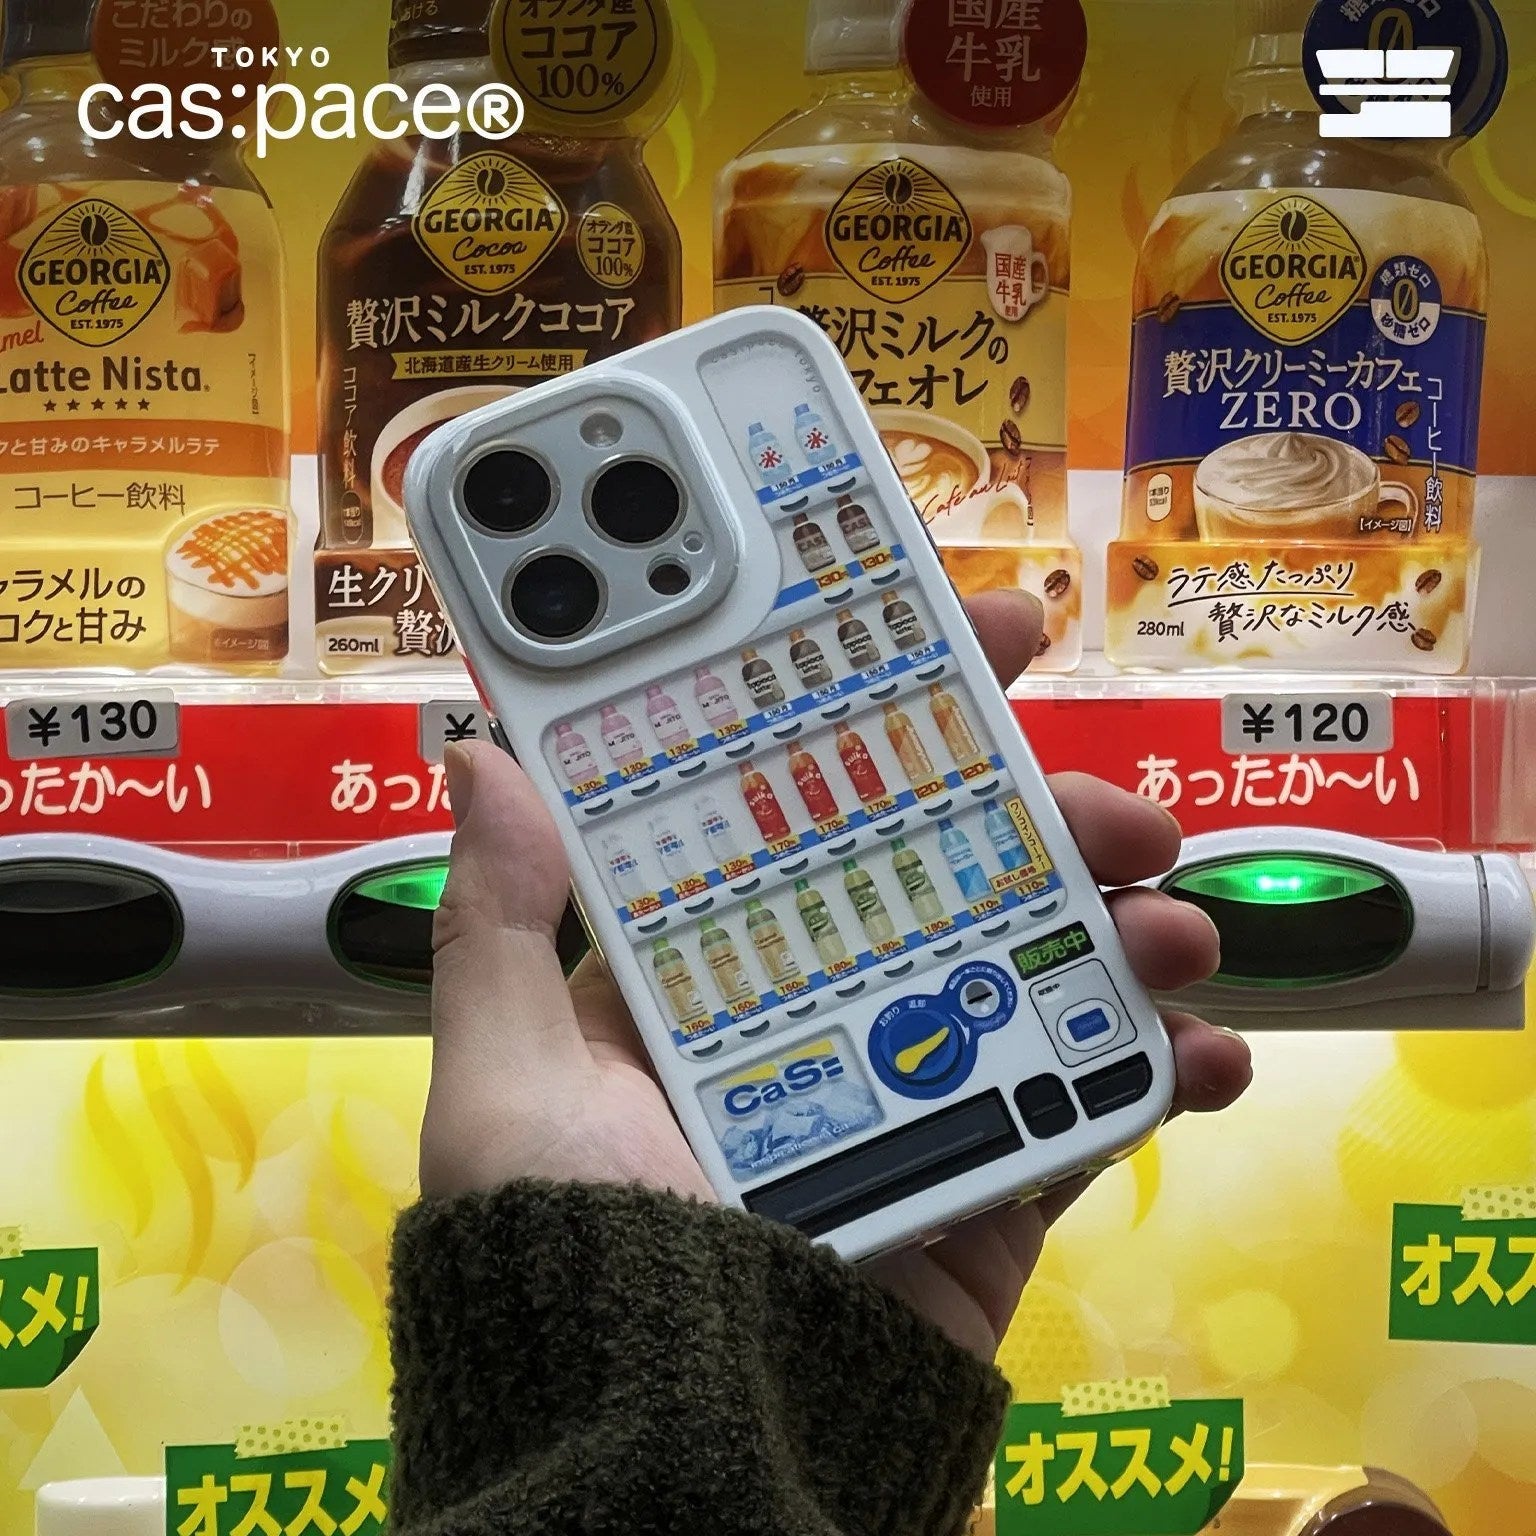 cas:pace 24S/S「自動販売機」携帯ケース - cas:pace 殼空間